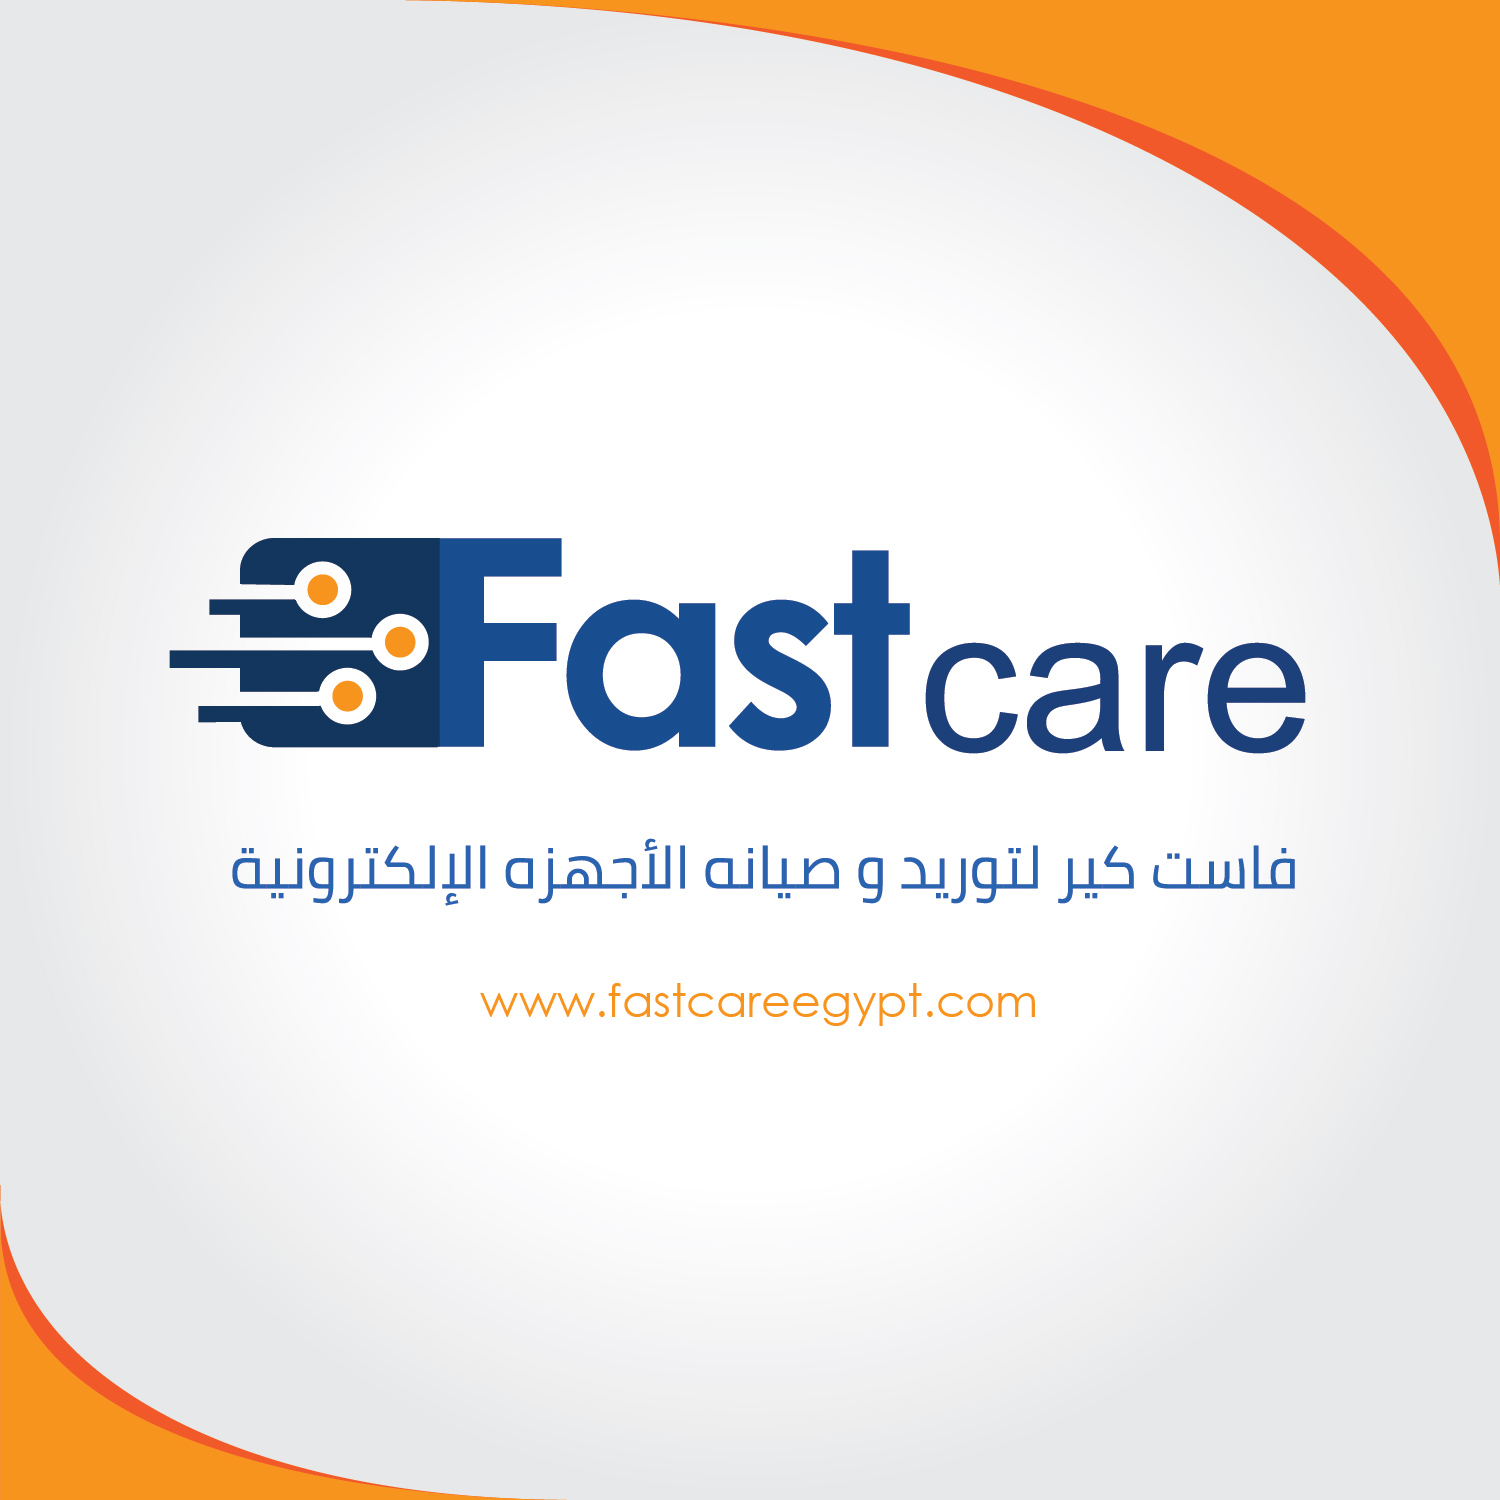 fast care-01